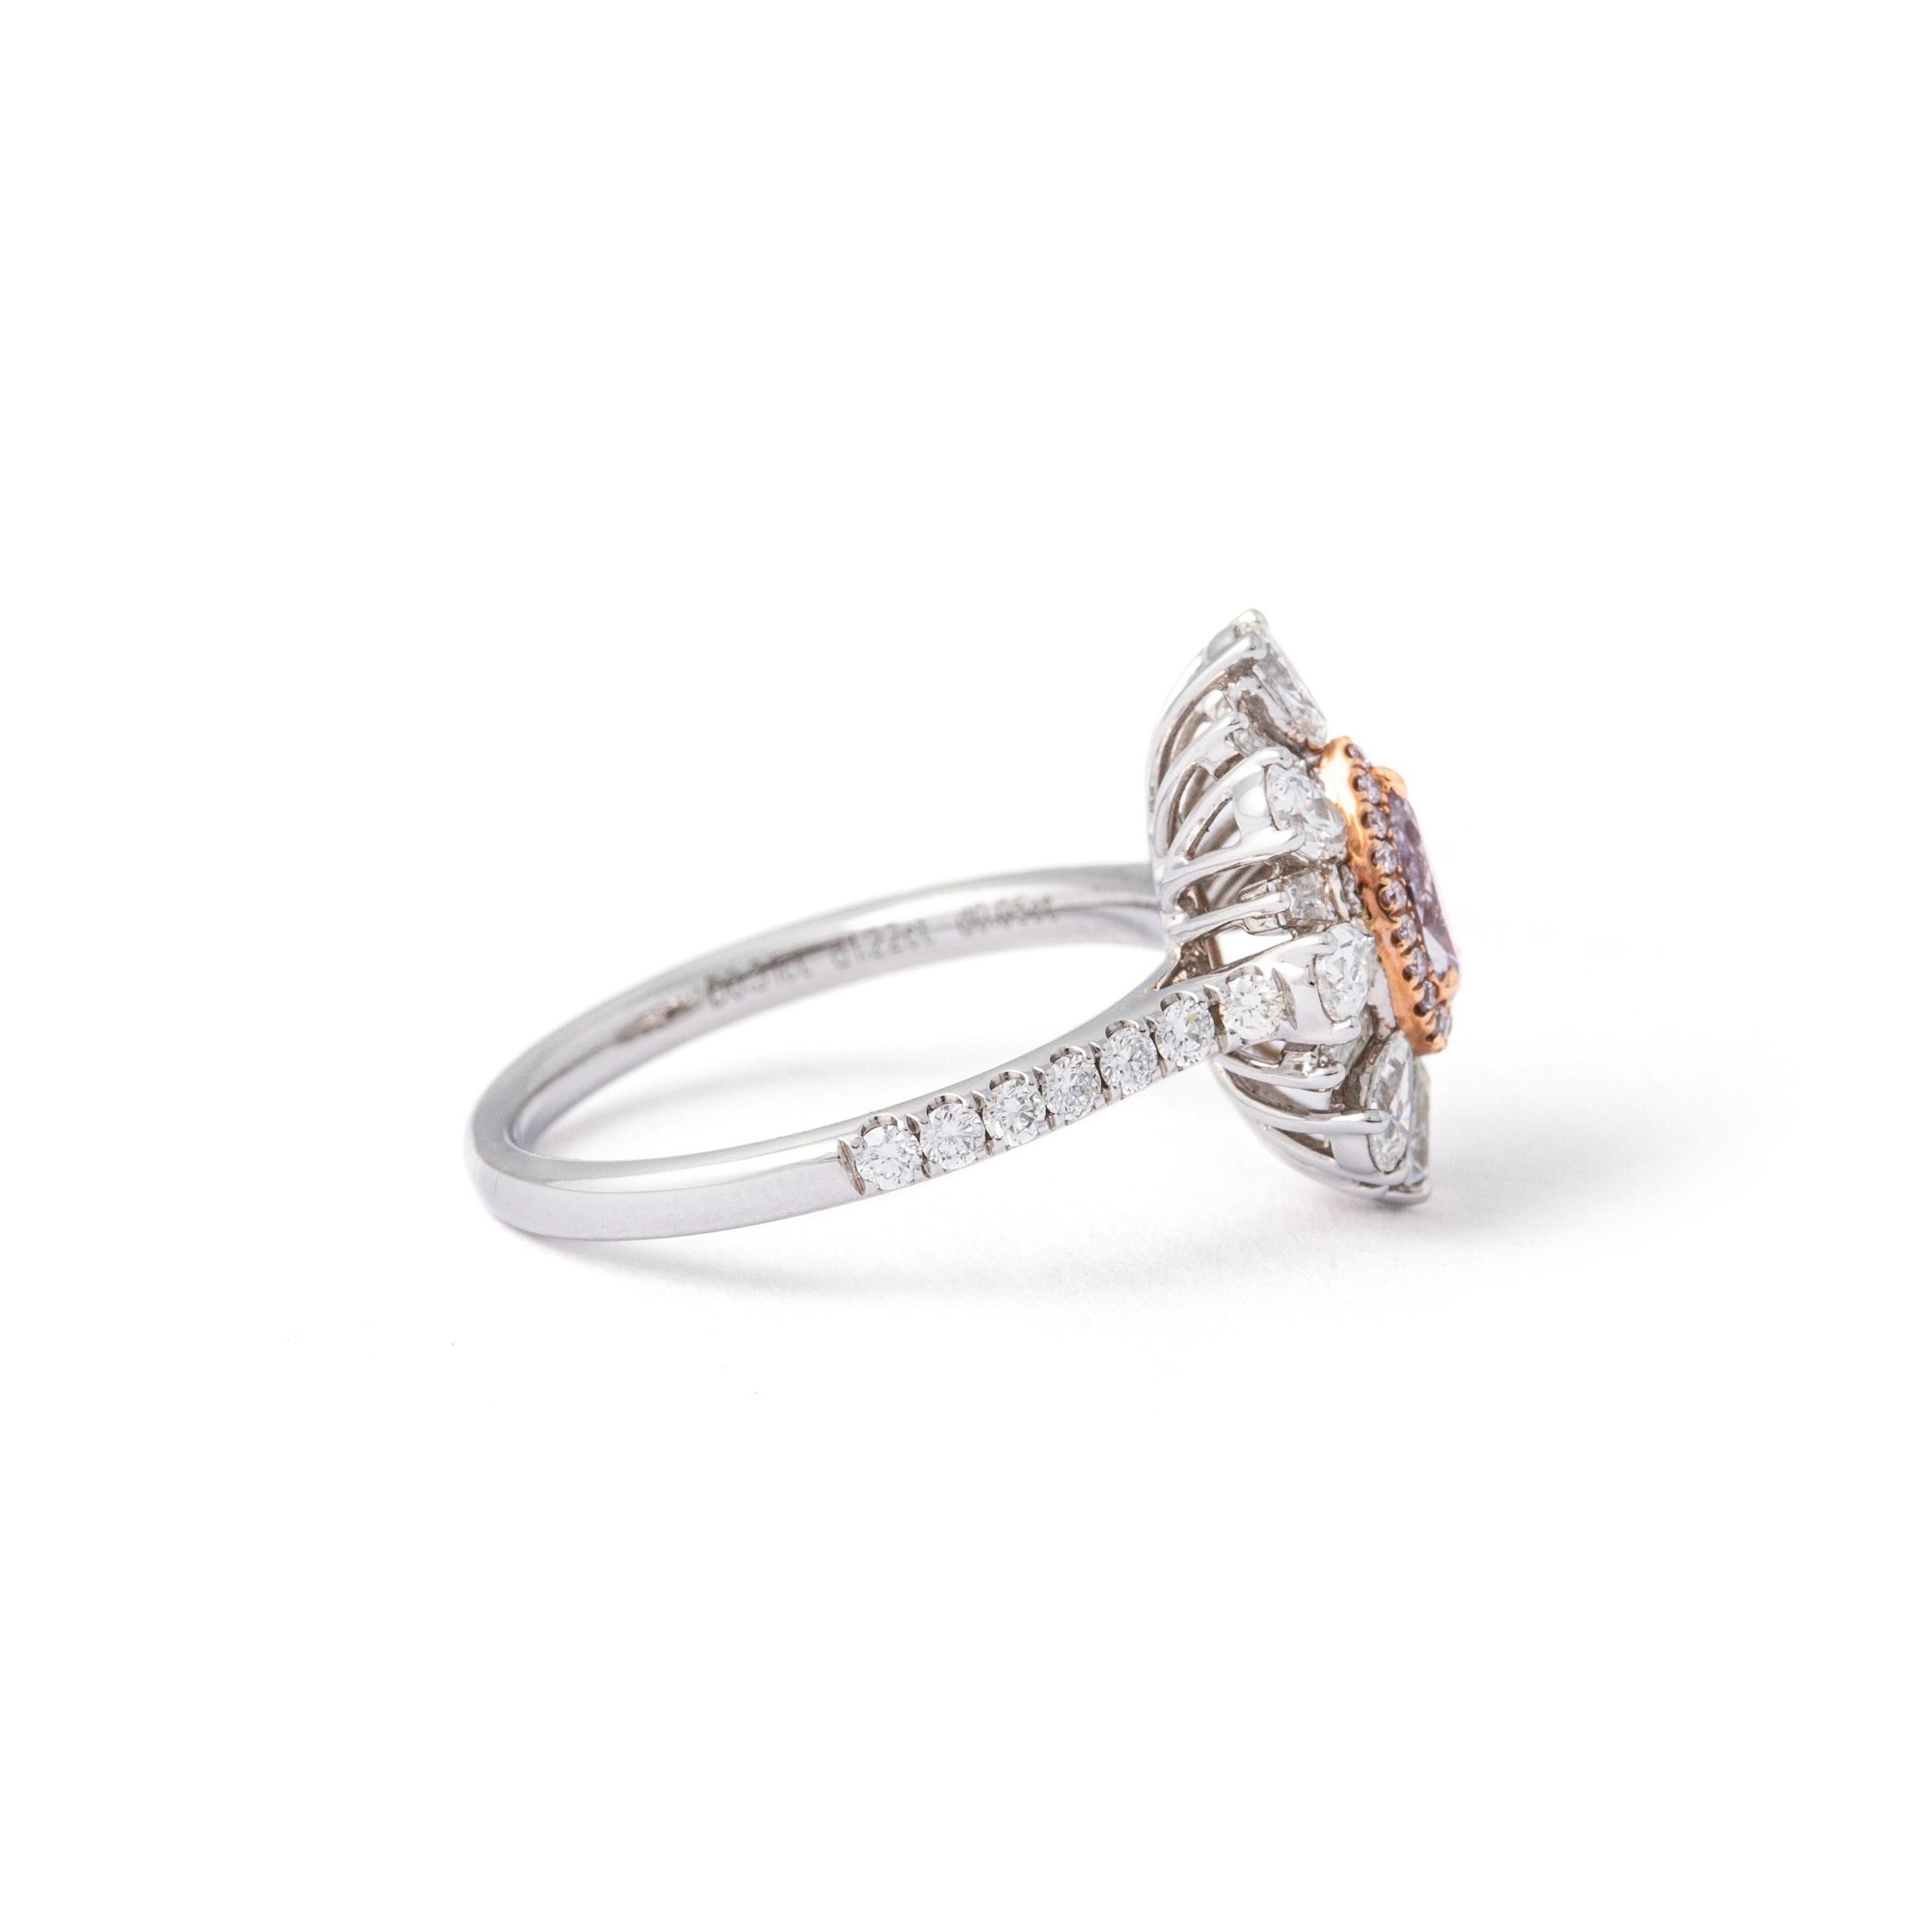 Fancy Pink Purple Diamond White Gold 18K Ring.

GIA certificate:
GIA, 0.31 carats fancy pink-purple, I1, natural.

Ring Size: 52.5 / 6.25 US.
Total weight: 4.05 grams.